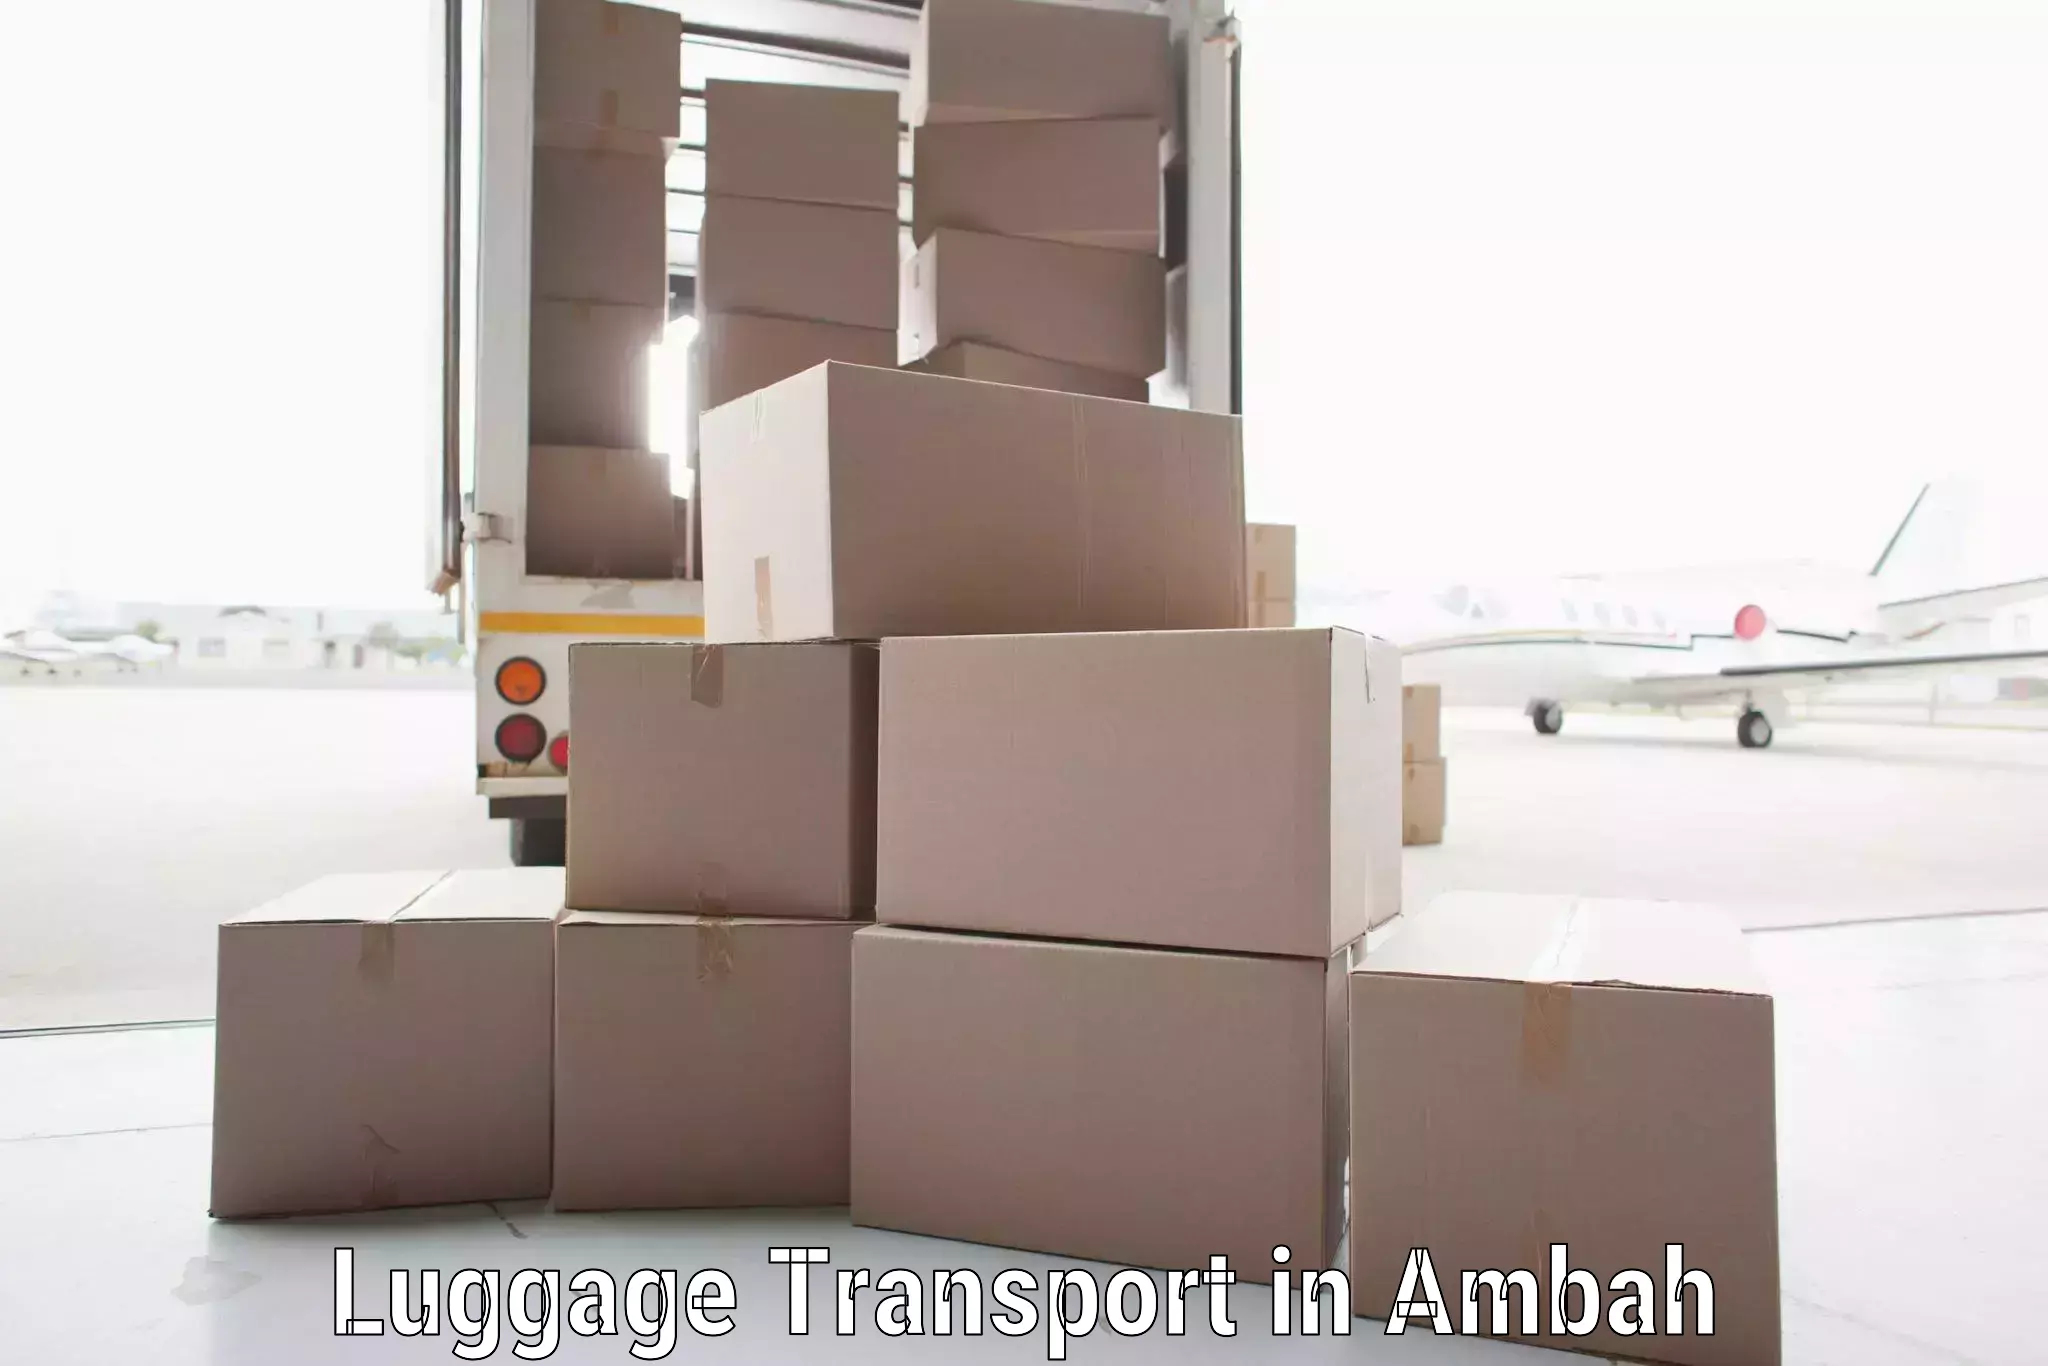 Luggage shipment tracking in Ambah